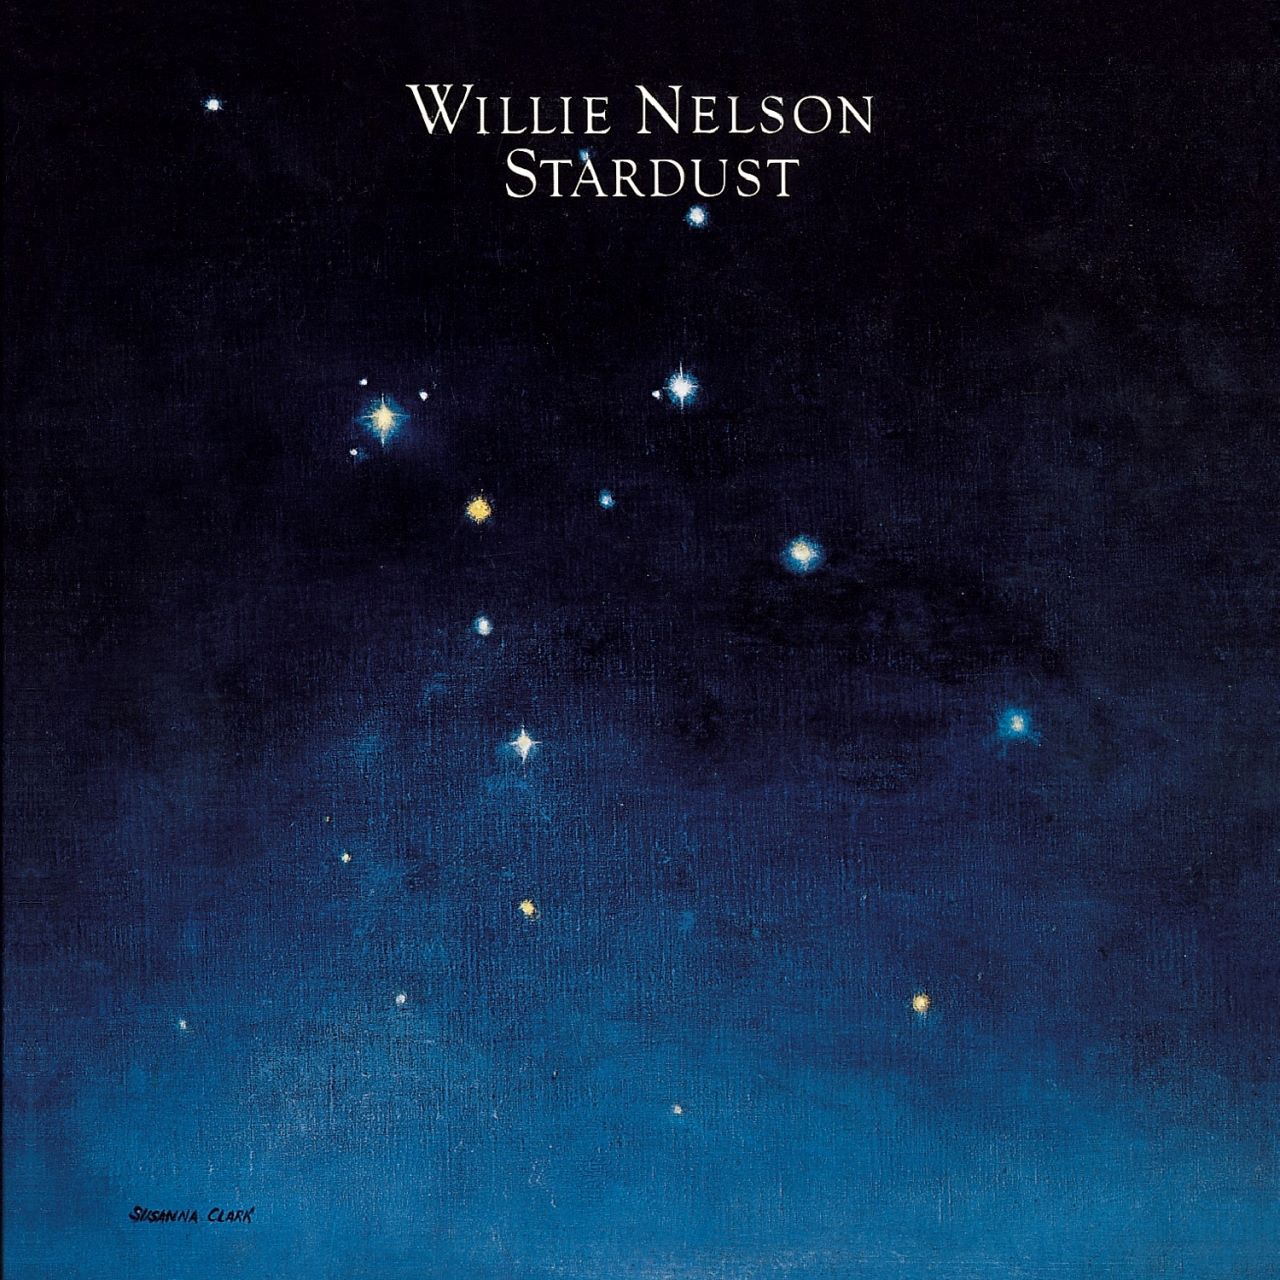 Willie Nelson – Stardust cover album